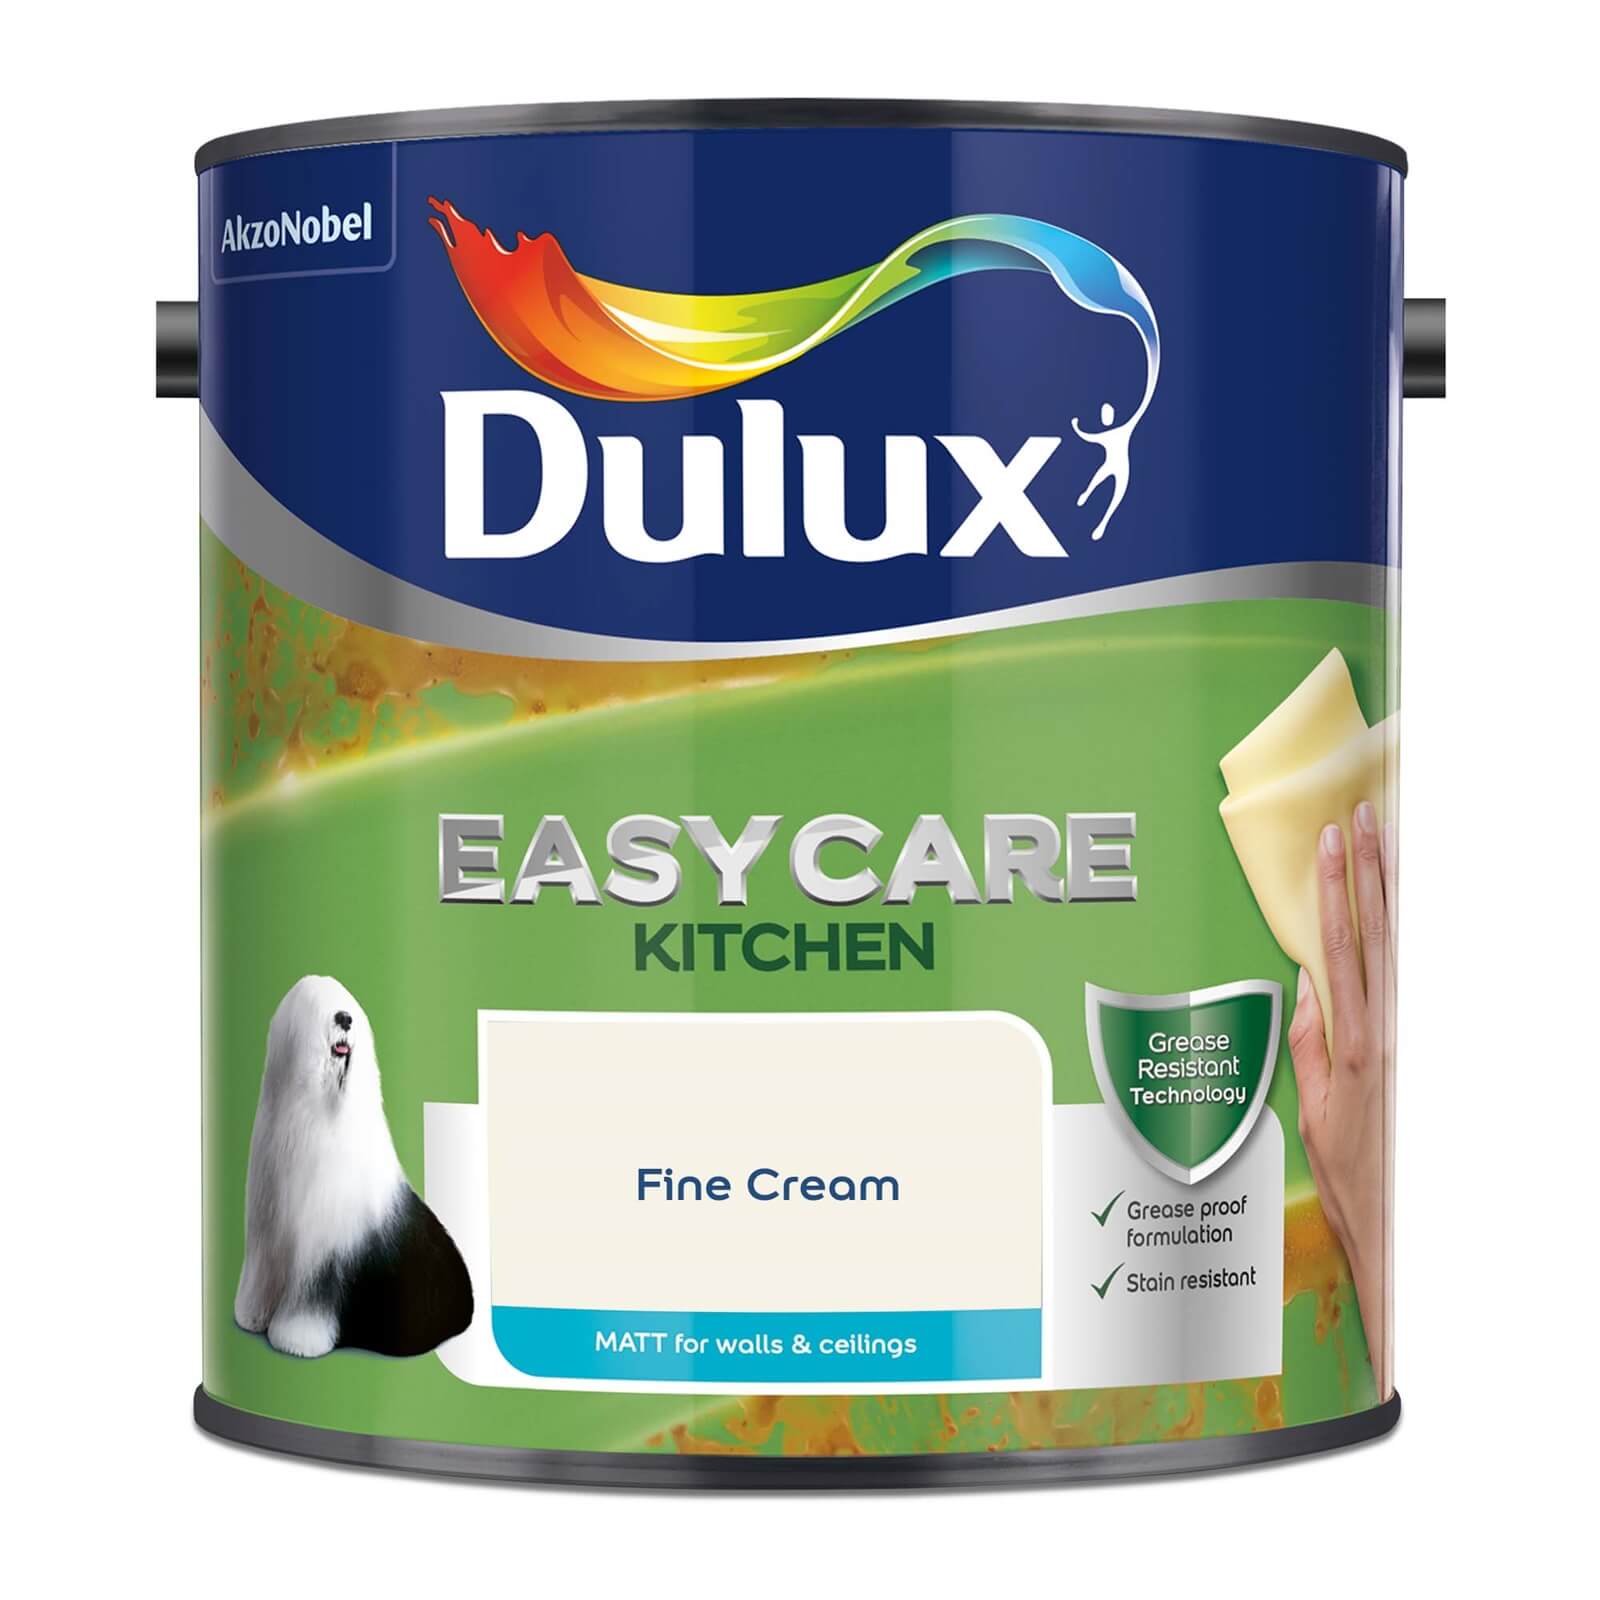 Dulux Easycare Kitchen Fine Cream Matt Paint - 2.5L